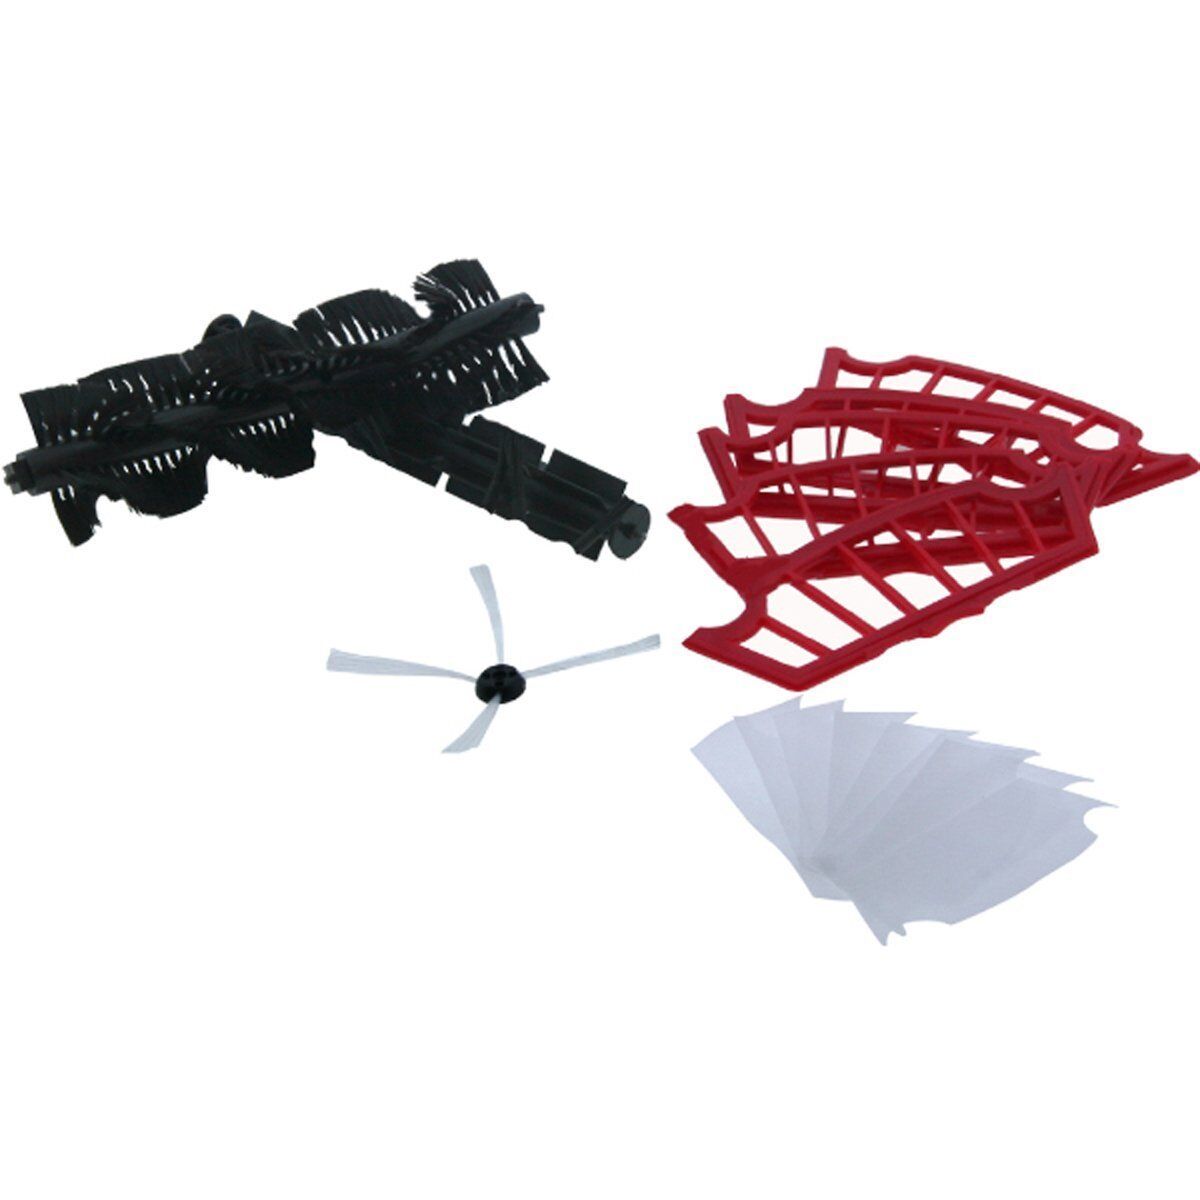 H. Koenig kit filtri + spazzole + rulli + setole aspirapolvere robot SWR22 TRX24